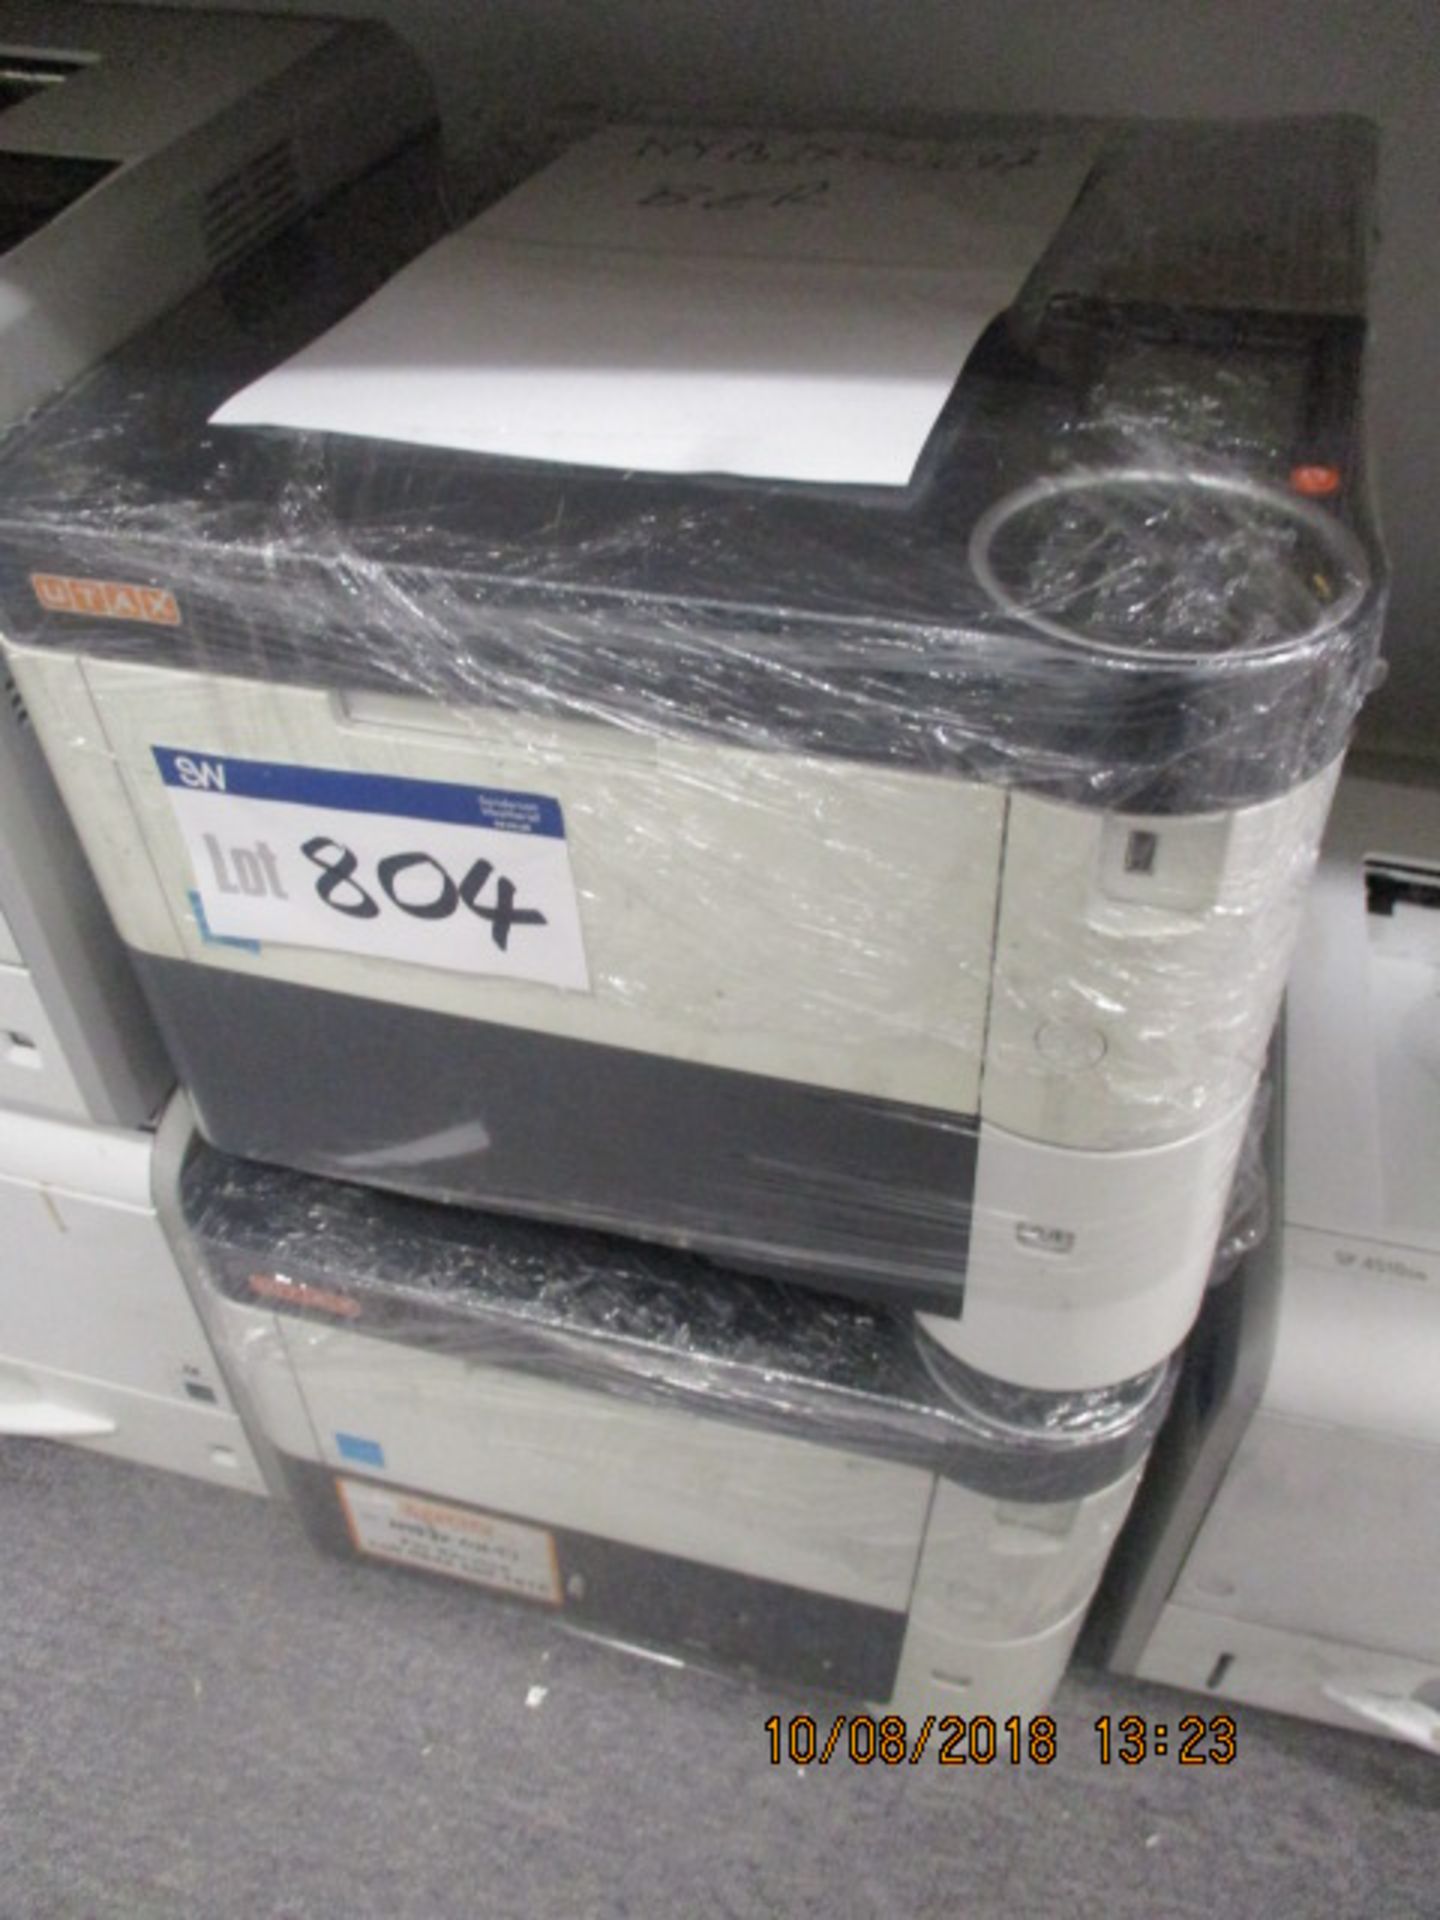 2 x Utax Printers